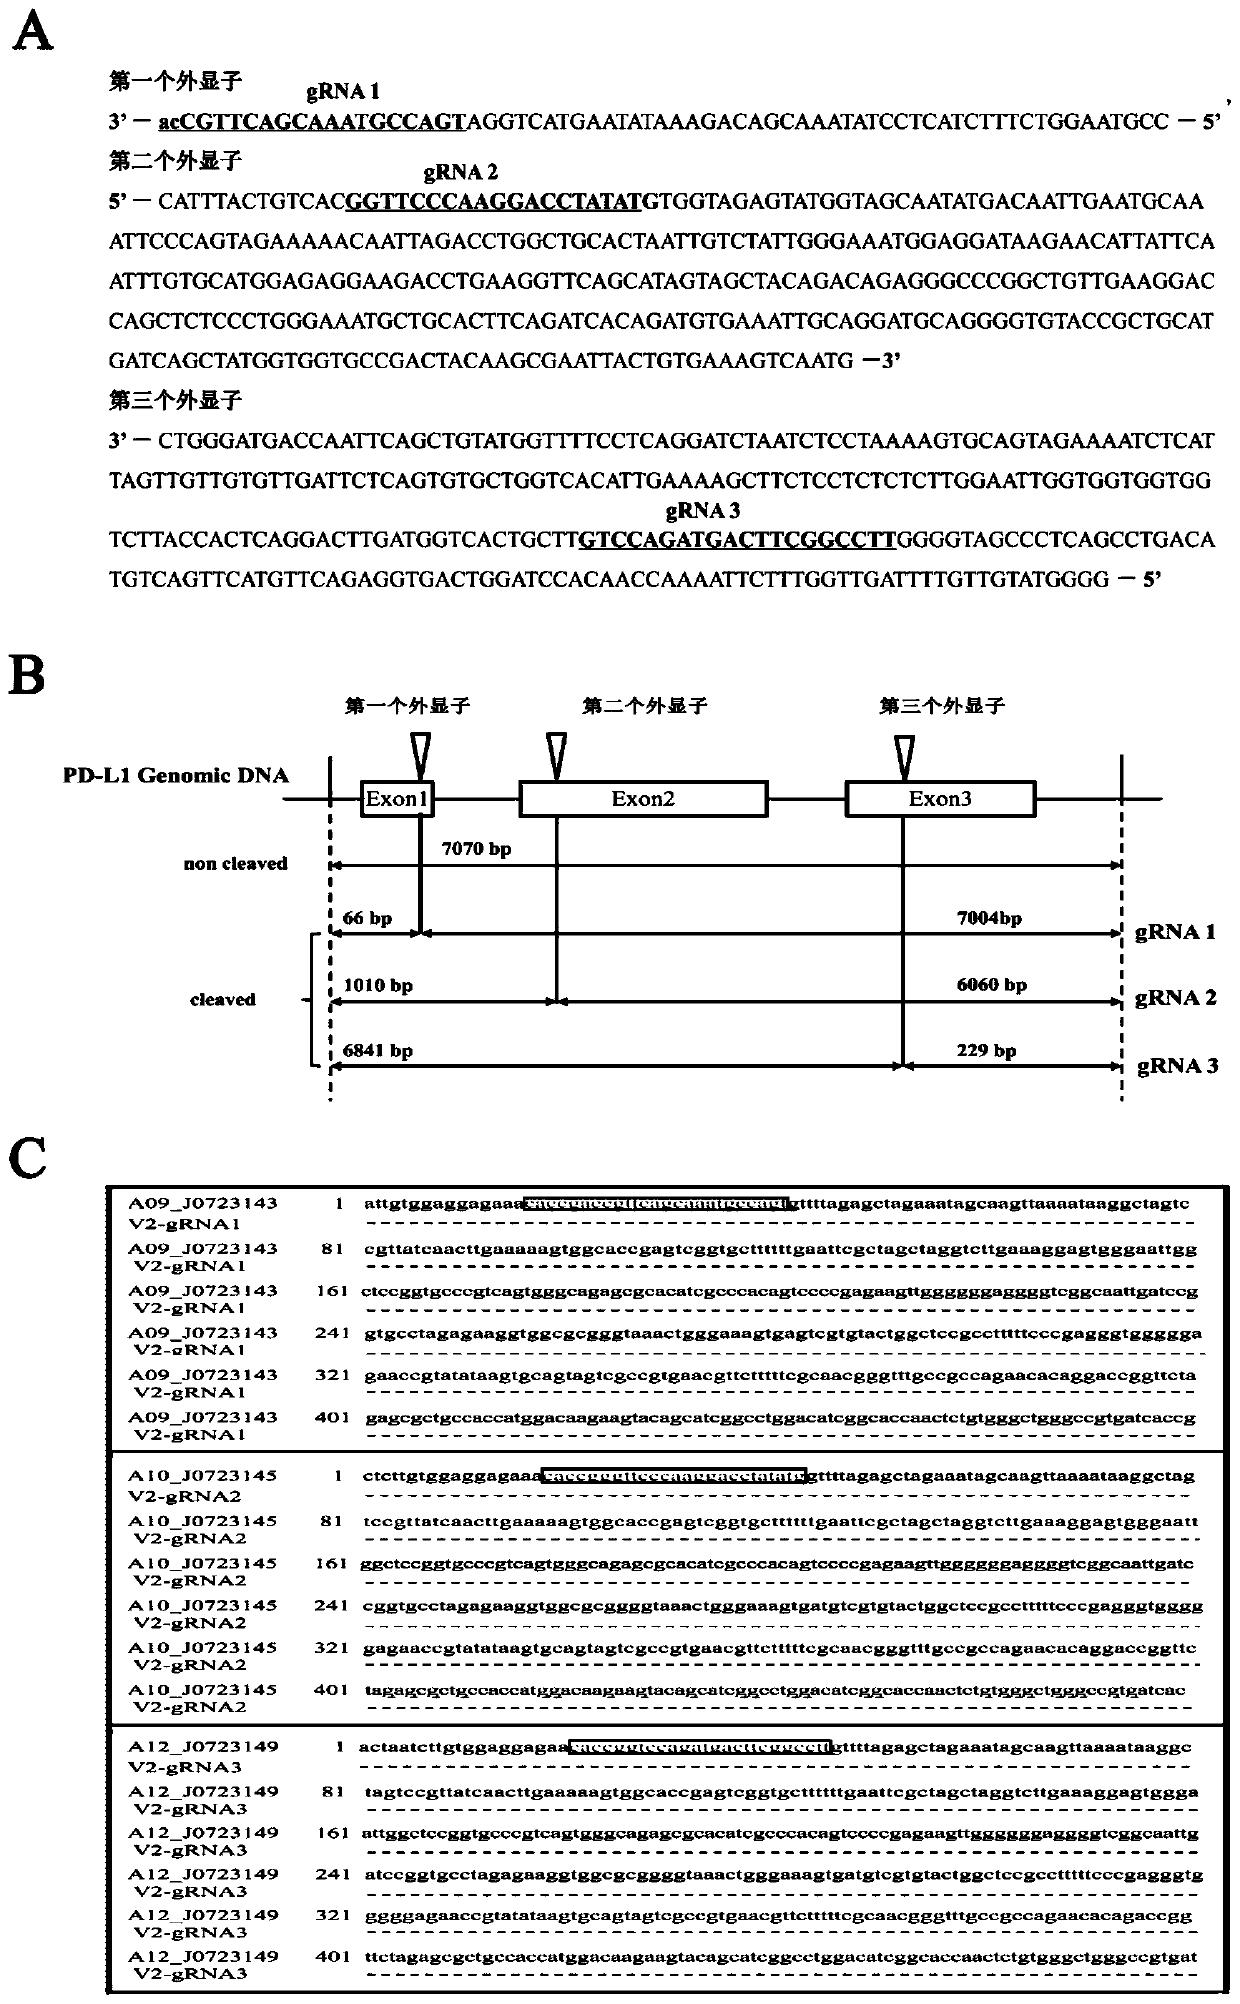 Method for knocking out PD-L1 gene in keratinocytes by CRISPR/Cas9 gene editing method